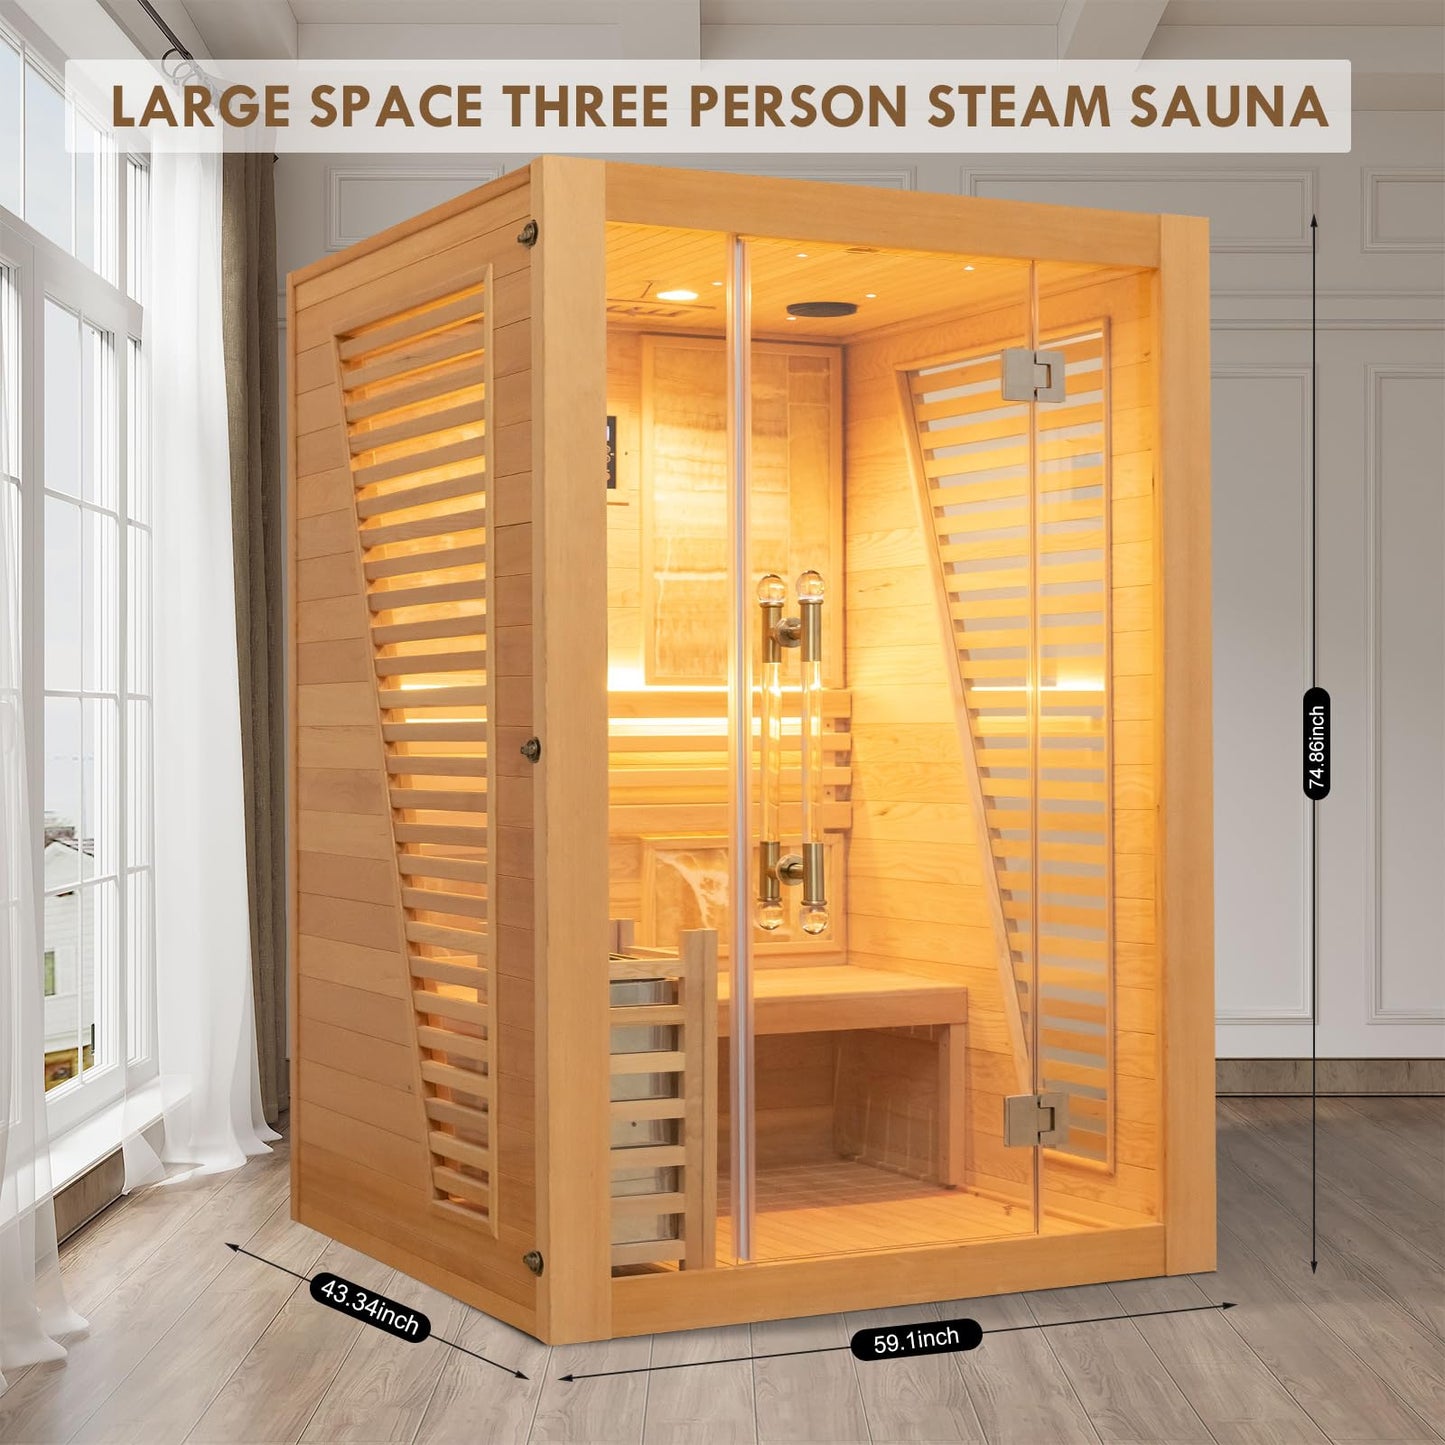 Smartmak Wood Home Steam Sauna, 2 or 3 Person Canadian Hemlock Traditional Luxurious Wooden Indoor Spa Room, with 4.5 kw Heater, Bluetooth Speaker,